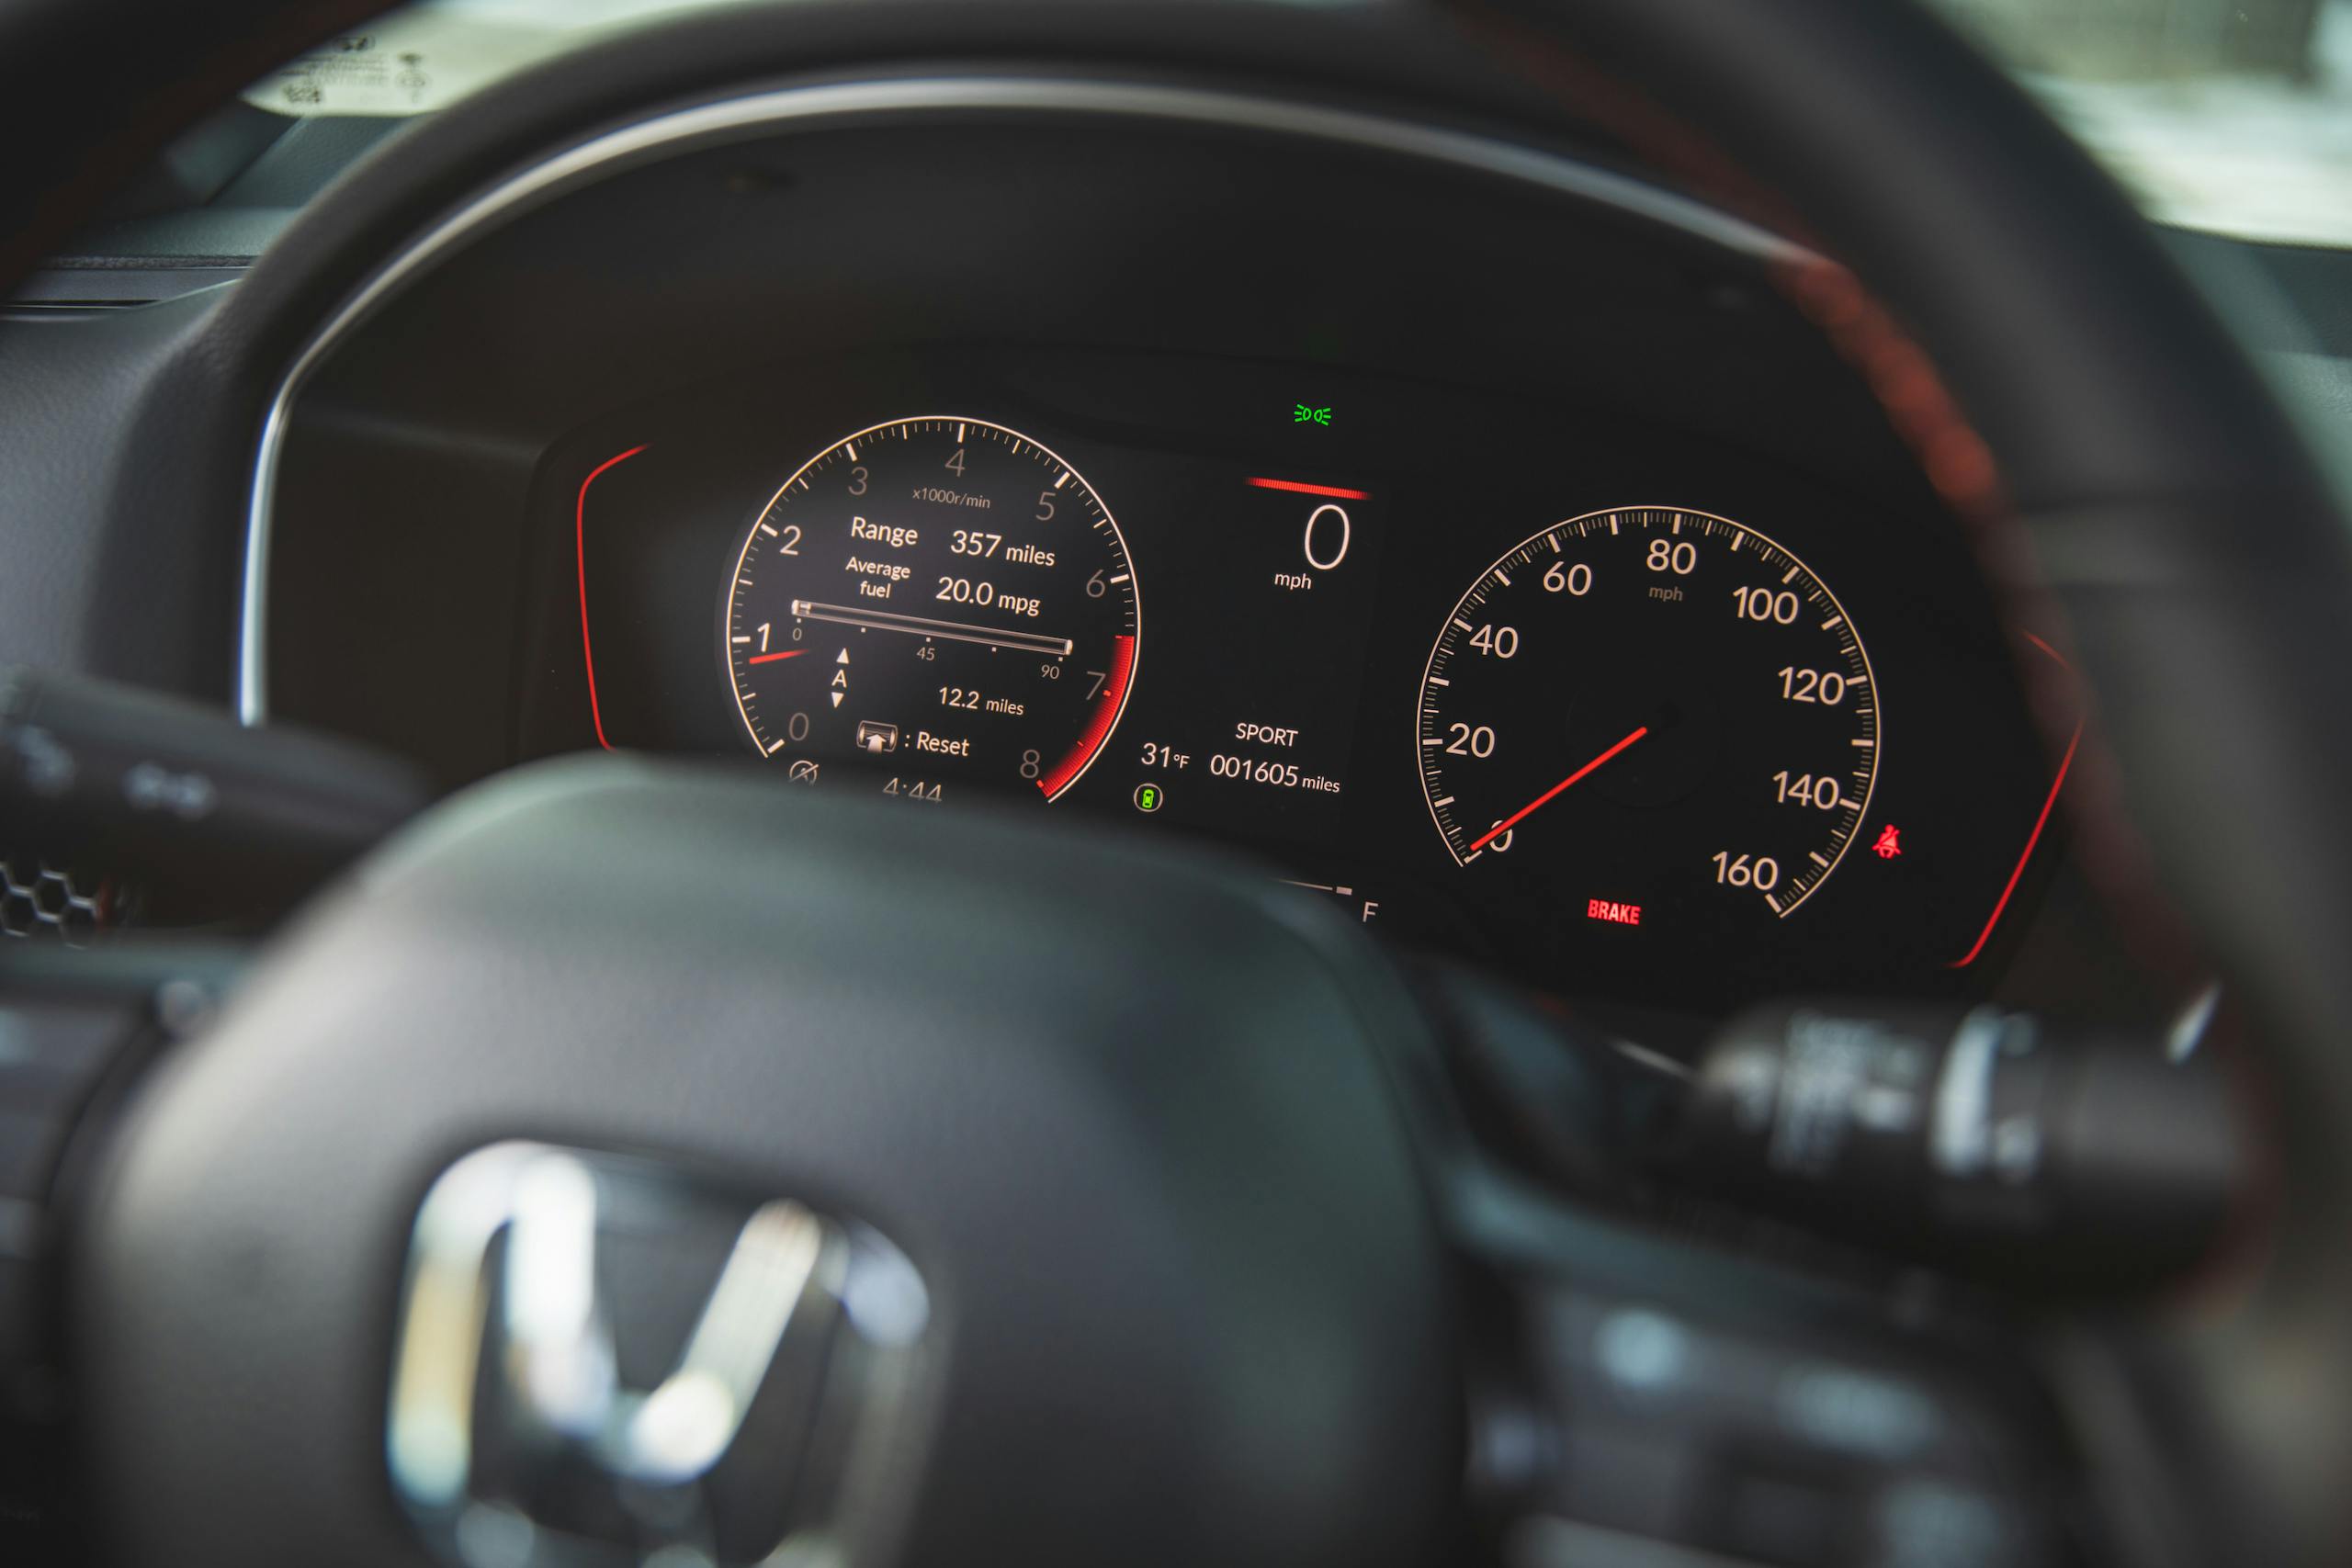 2022 Honda Civic Si digital dash gauges